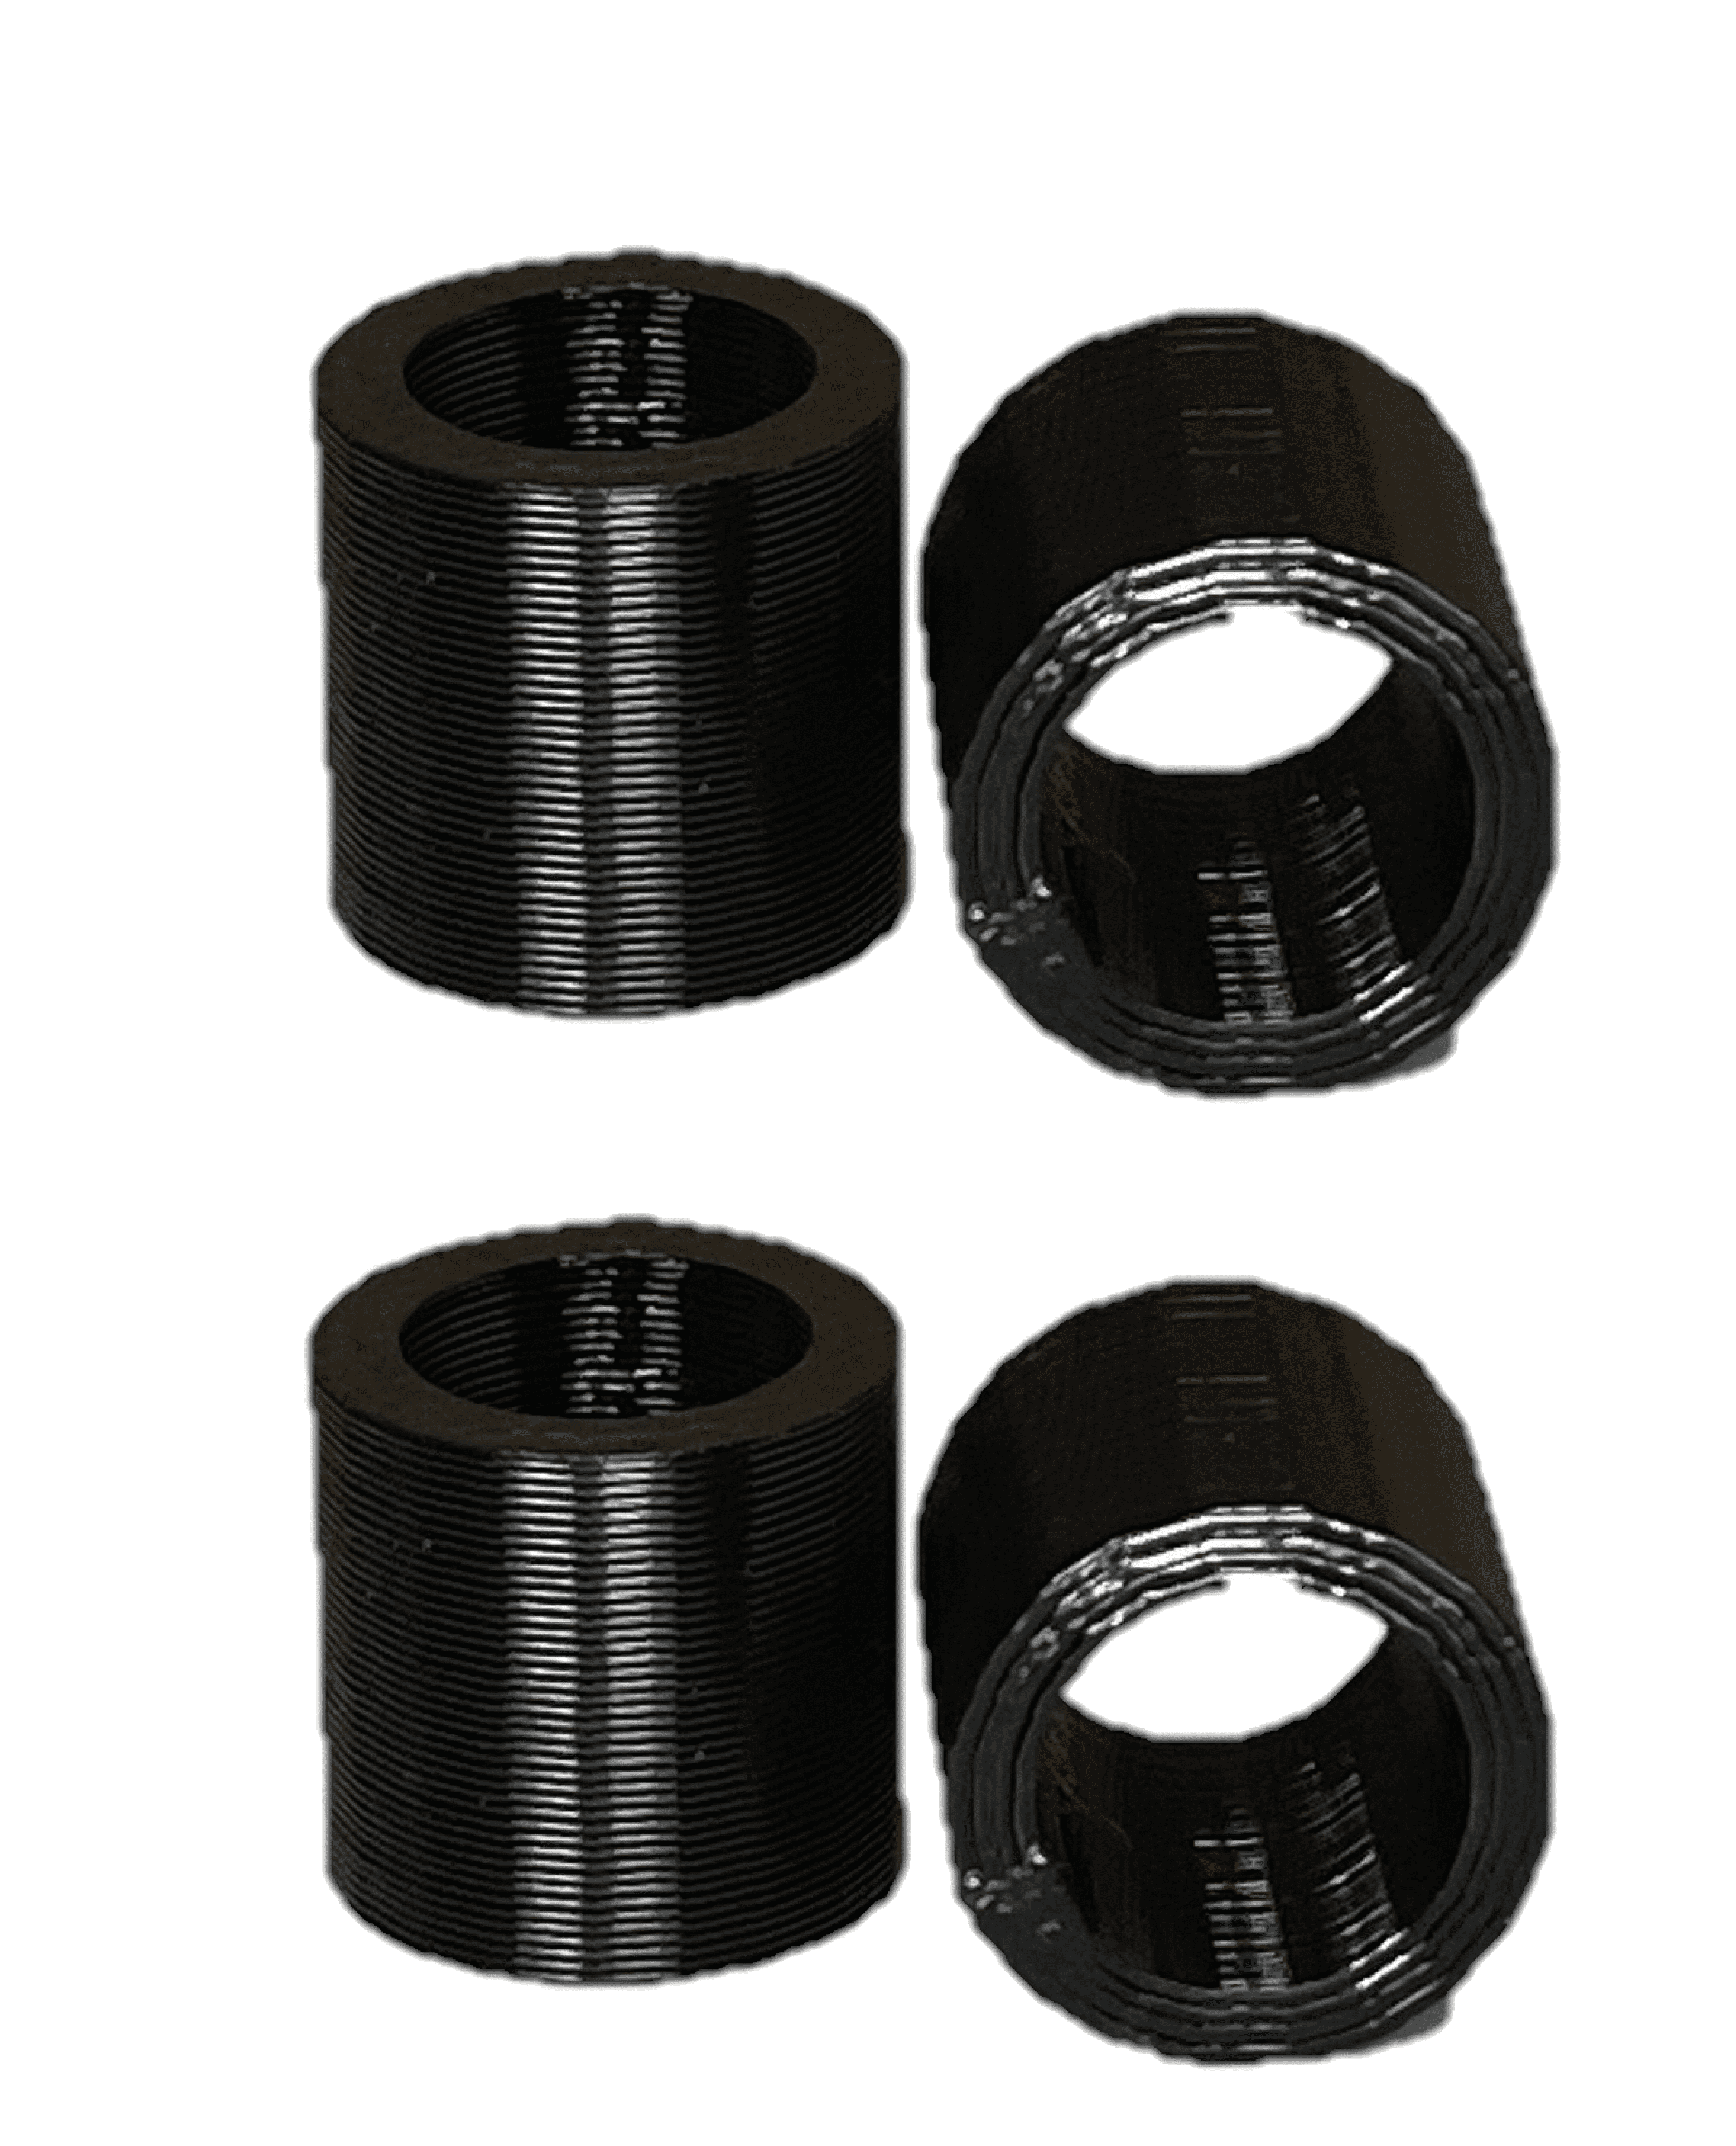 Cricut Explore Air 1 and 2 Rubber Roller Replacement Set Black